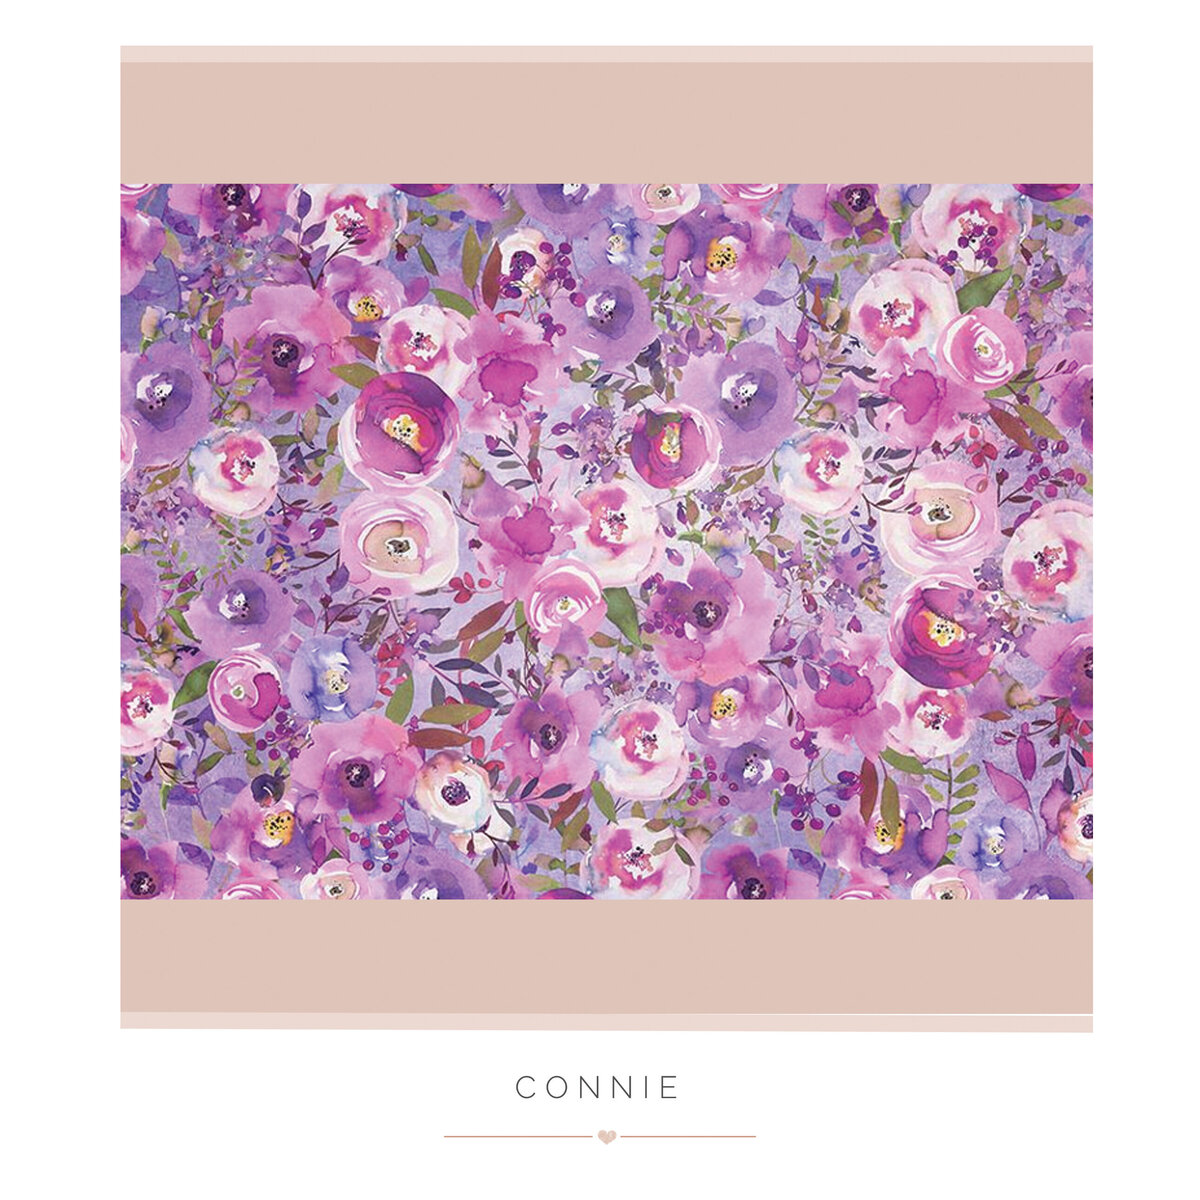 Connie